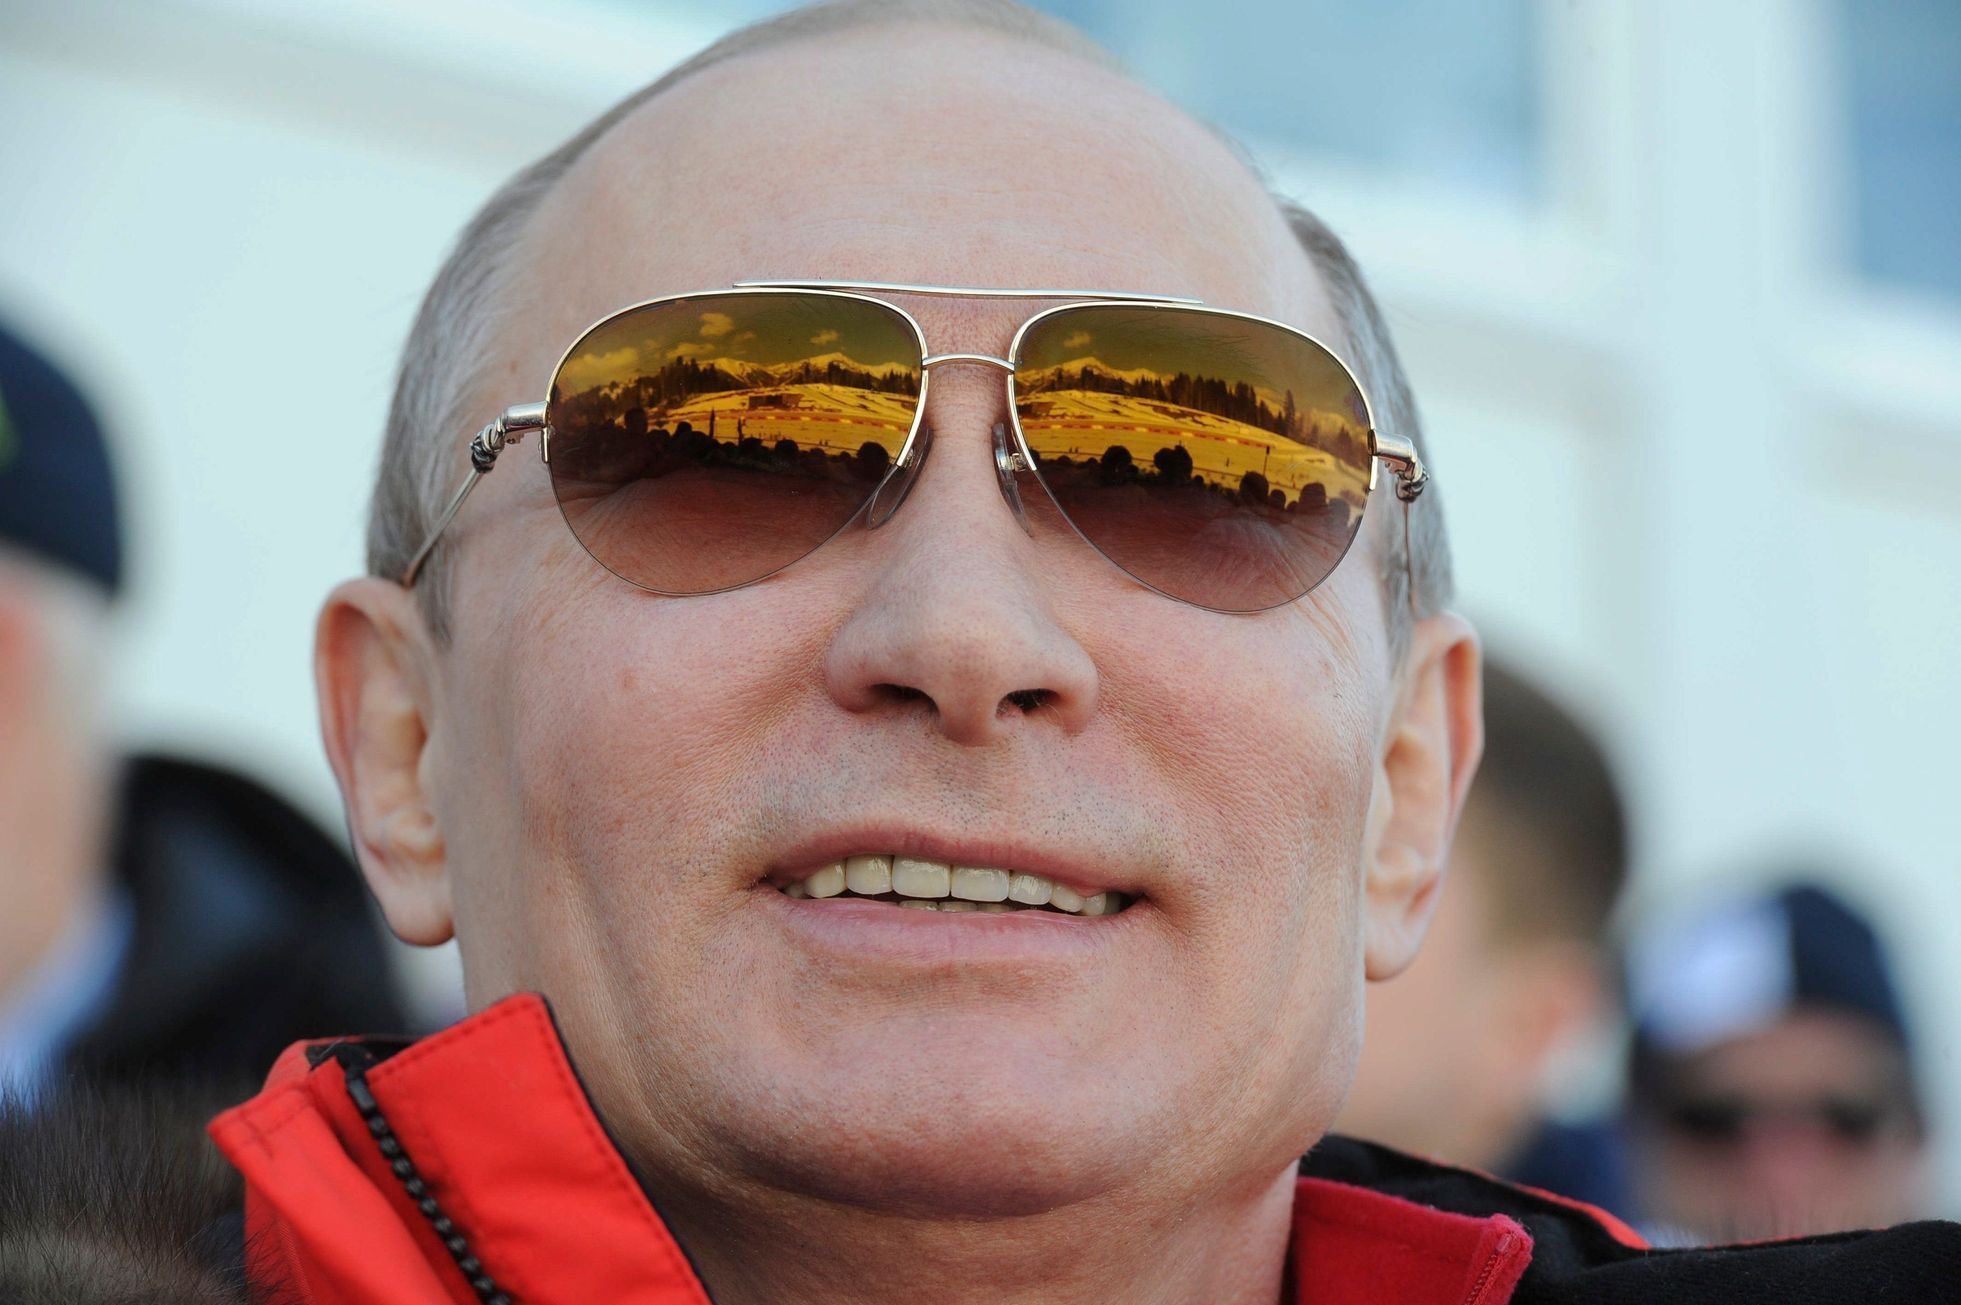 Soči 2014: Vladimir Putin